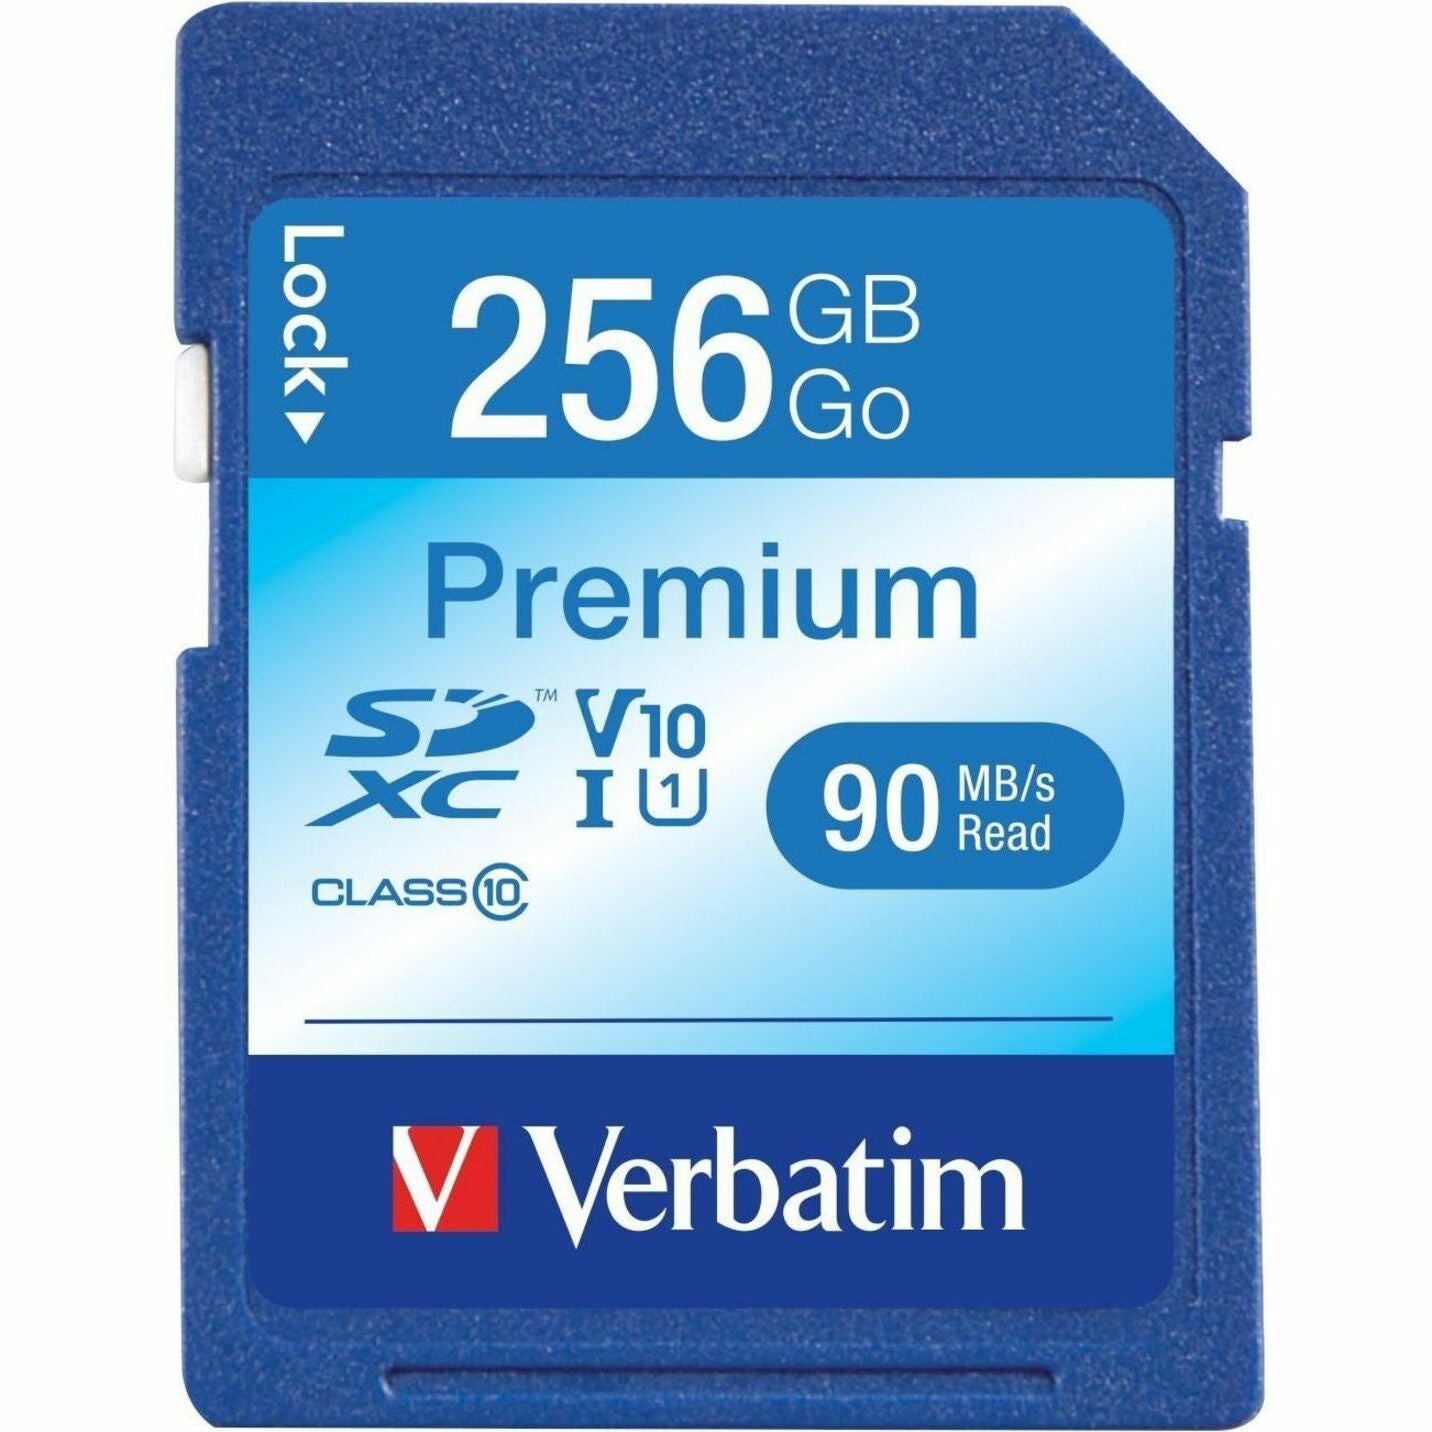 Verbatim VER99828 256GB Premium SDXC Card, High-Speed Storage for Your Devices